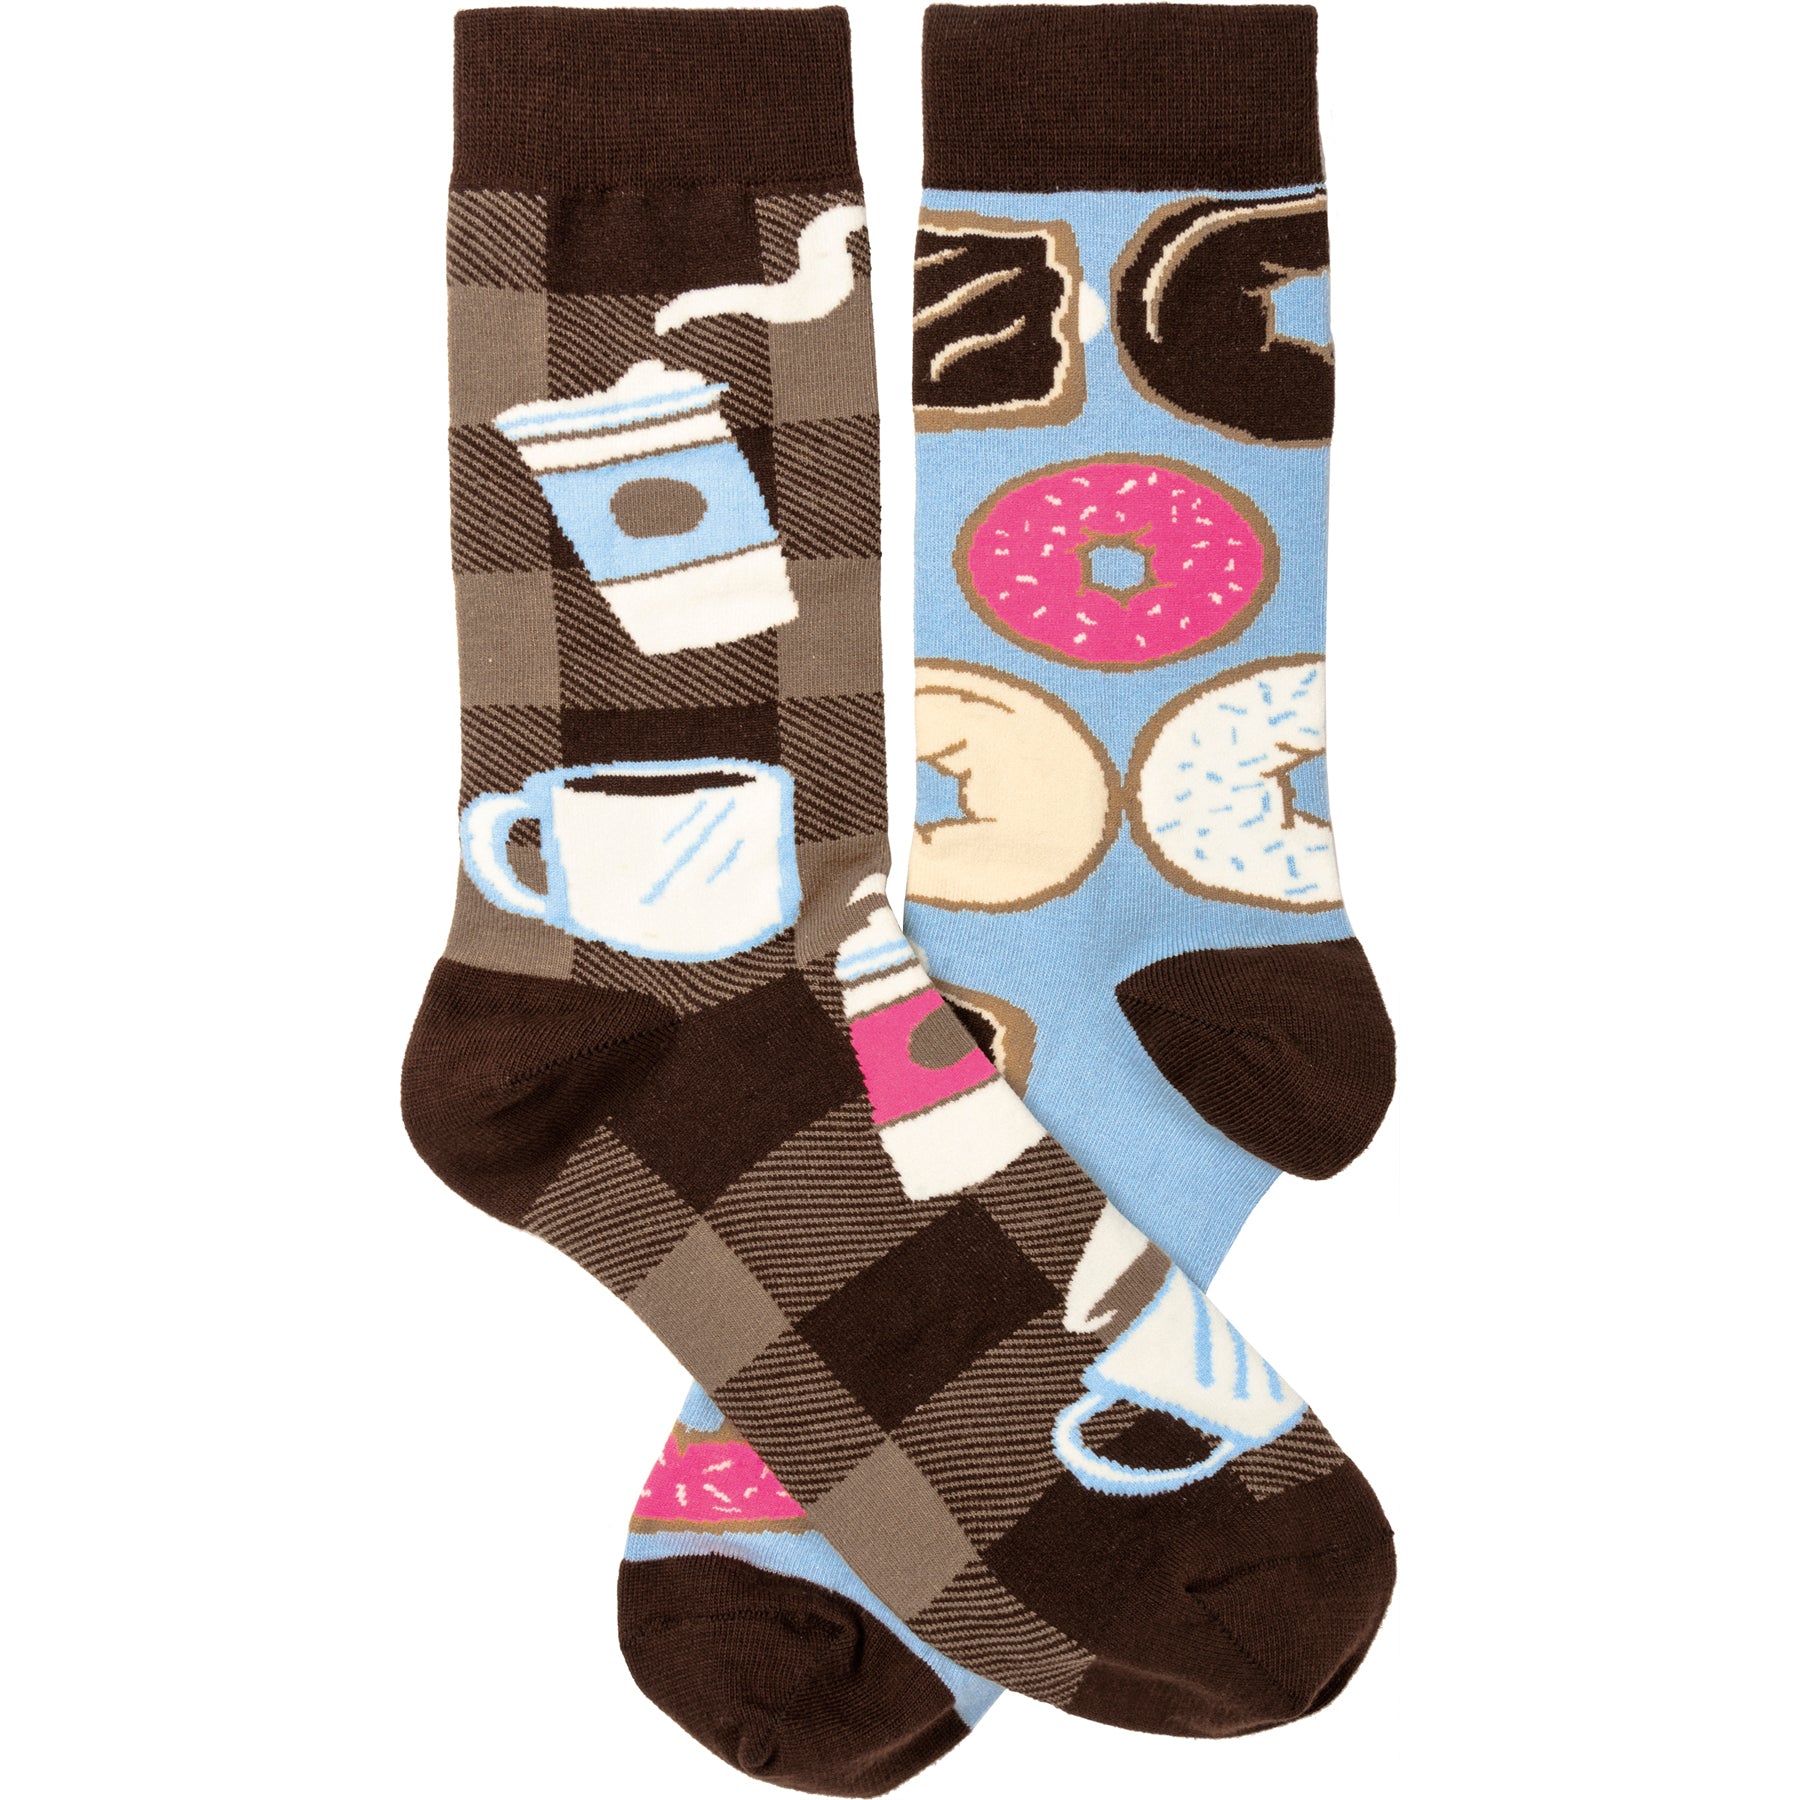 Socks - Donuts & Coffee